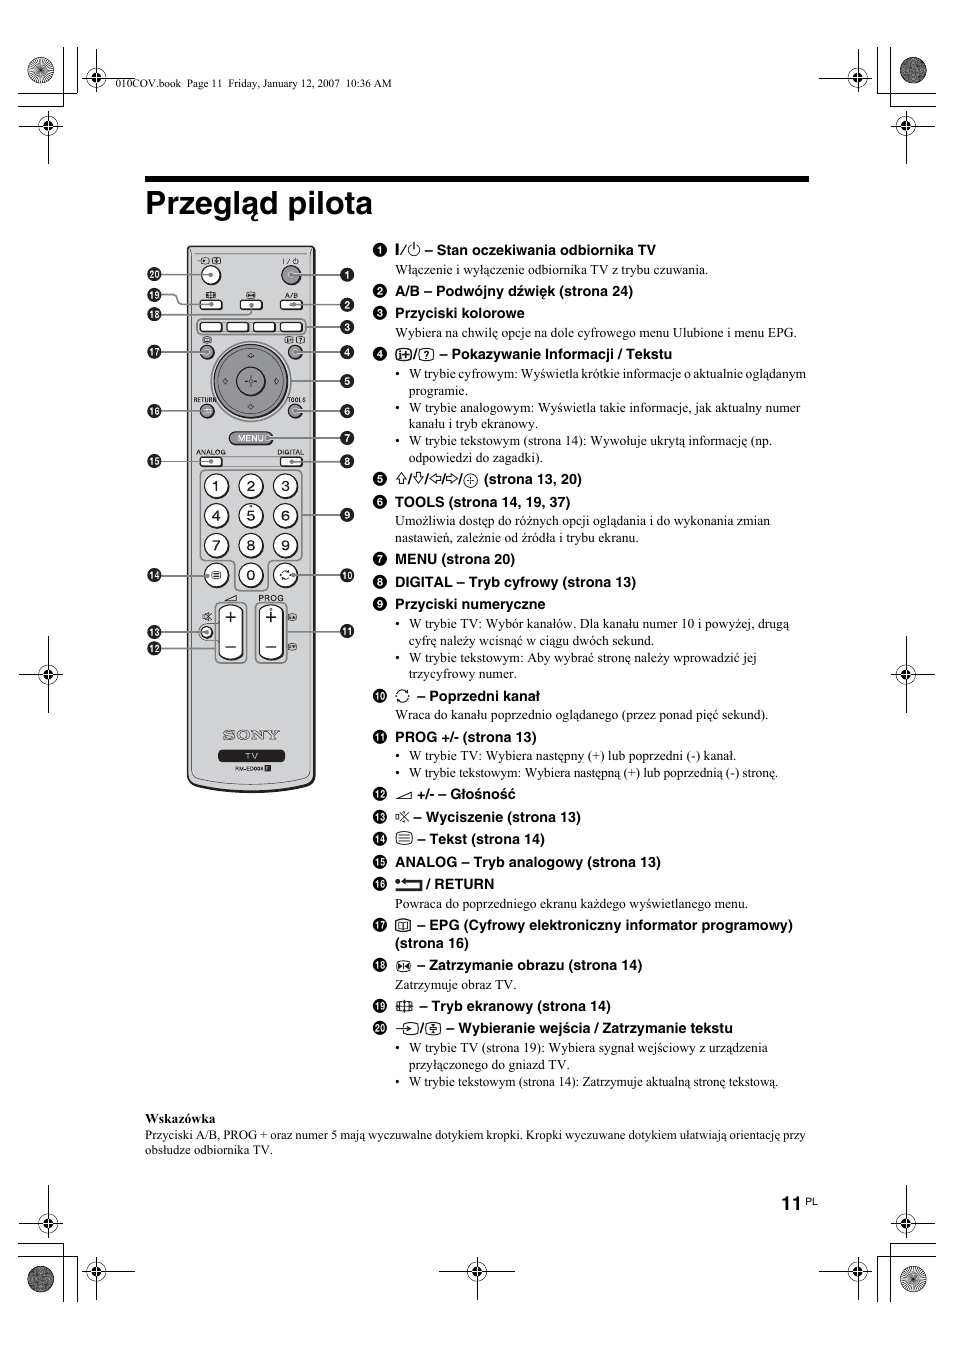 Przegląd pilota | Инструкция по эксплуатации Sony KDL-46V2500 | Страница 185 / 216